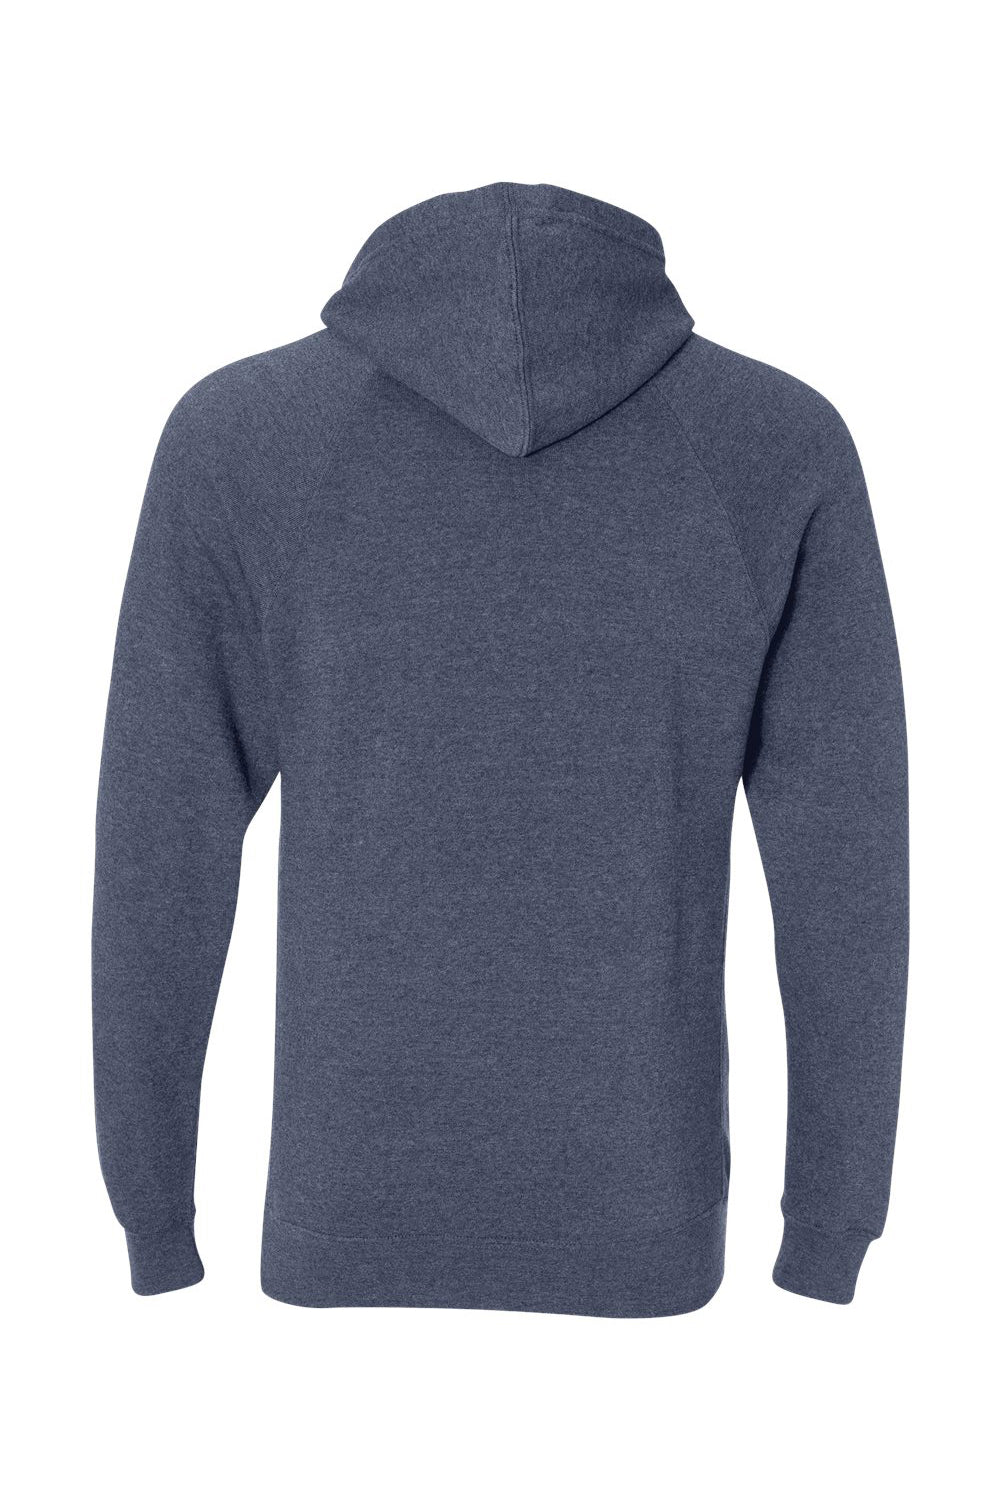 Independent Trading Co. PRM33SBP Mens Special Blend Raglan Hooded Sweatshirt Hoodie Midnight Navy Blue Flat Back